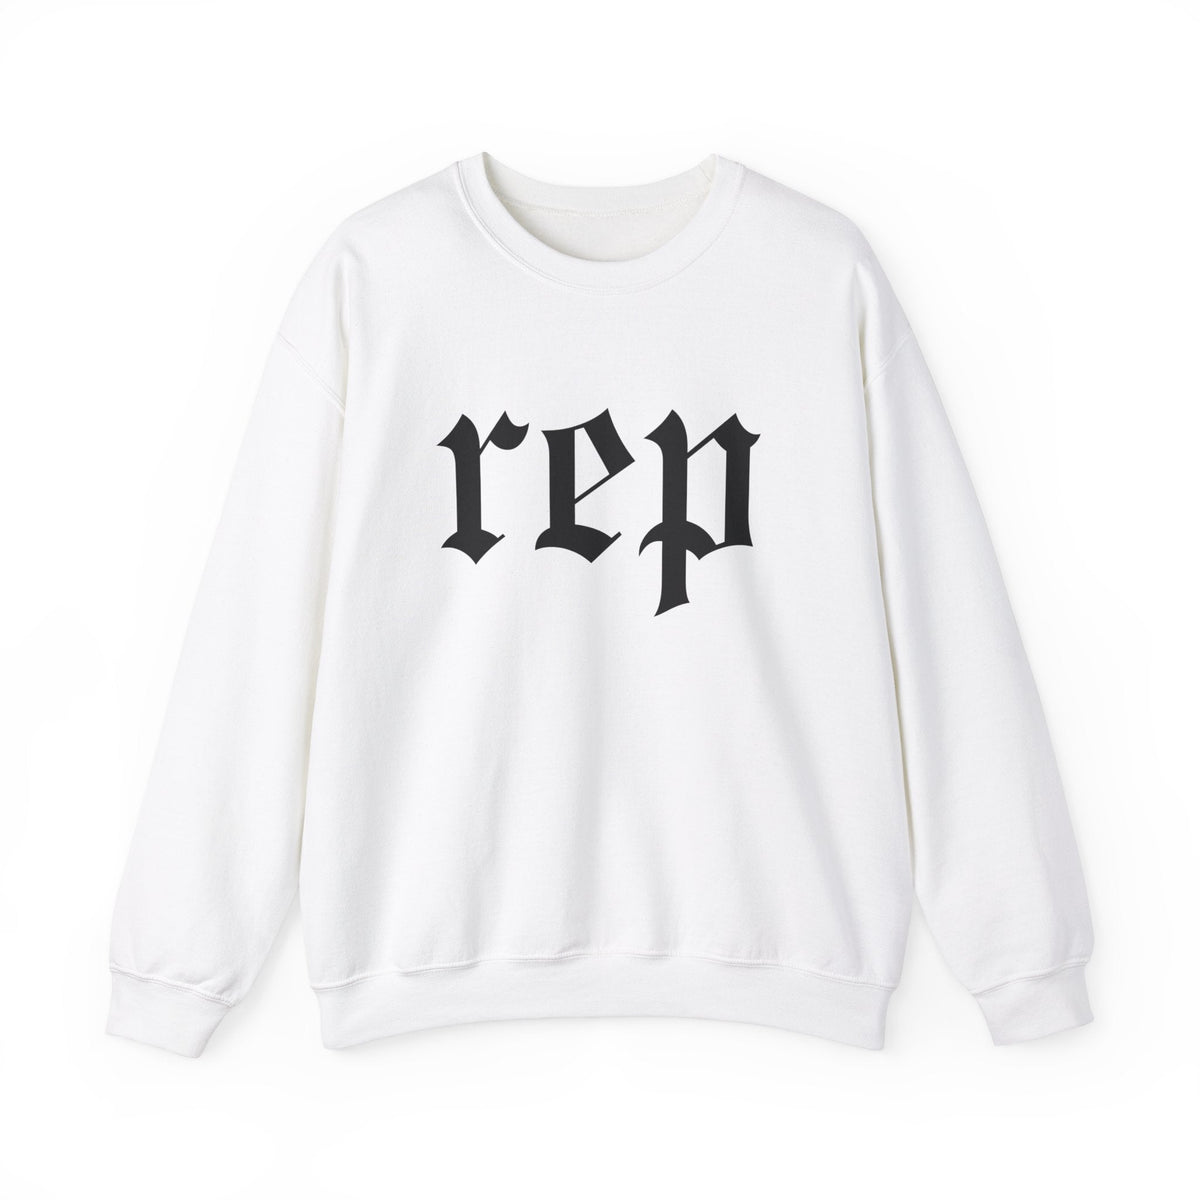 Reputation Sweatshirt | Rep. | Swiftie Sweatshirts | Taylor Swift Merch Sweatshirt TheFringeCultureCollective